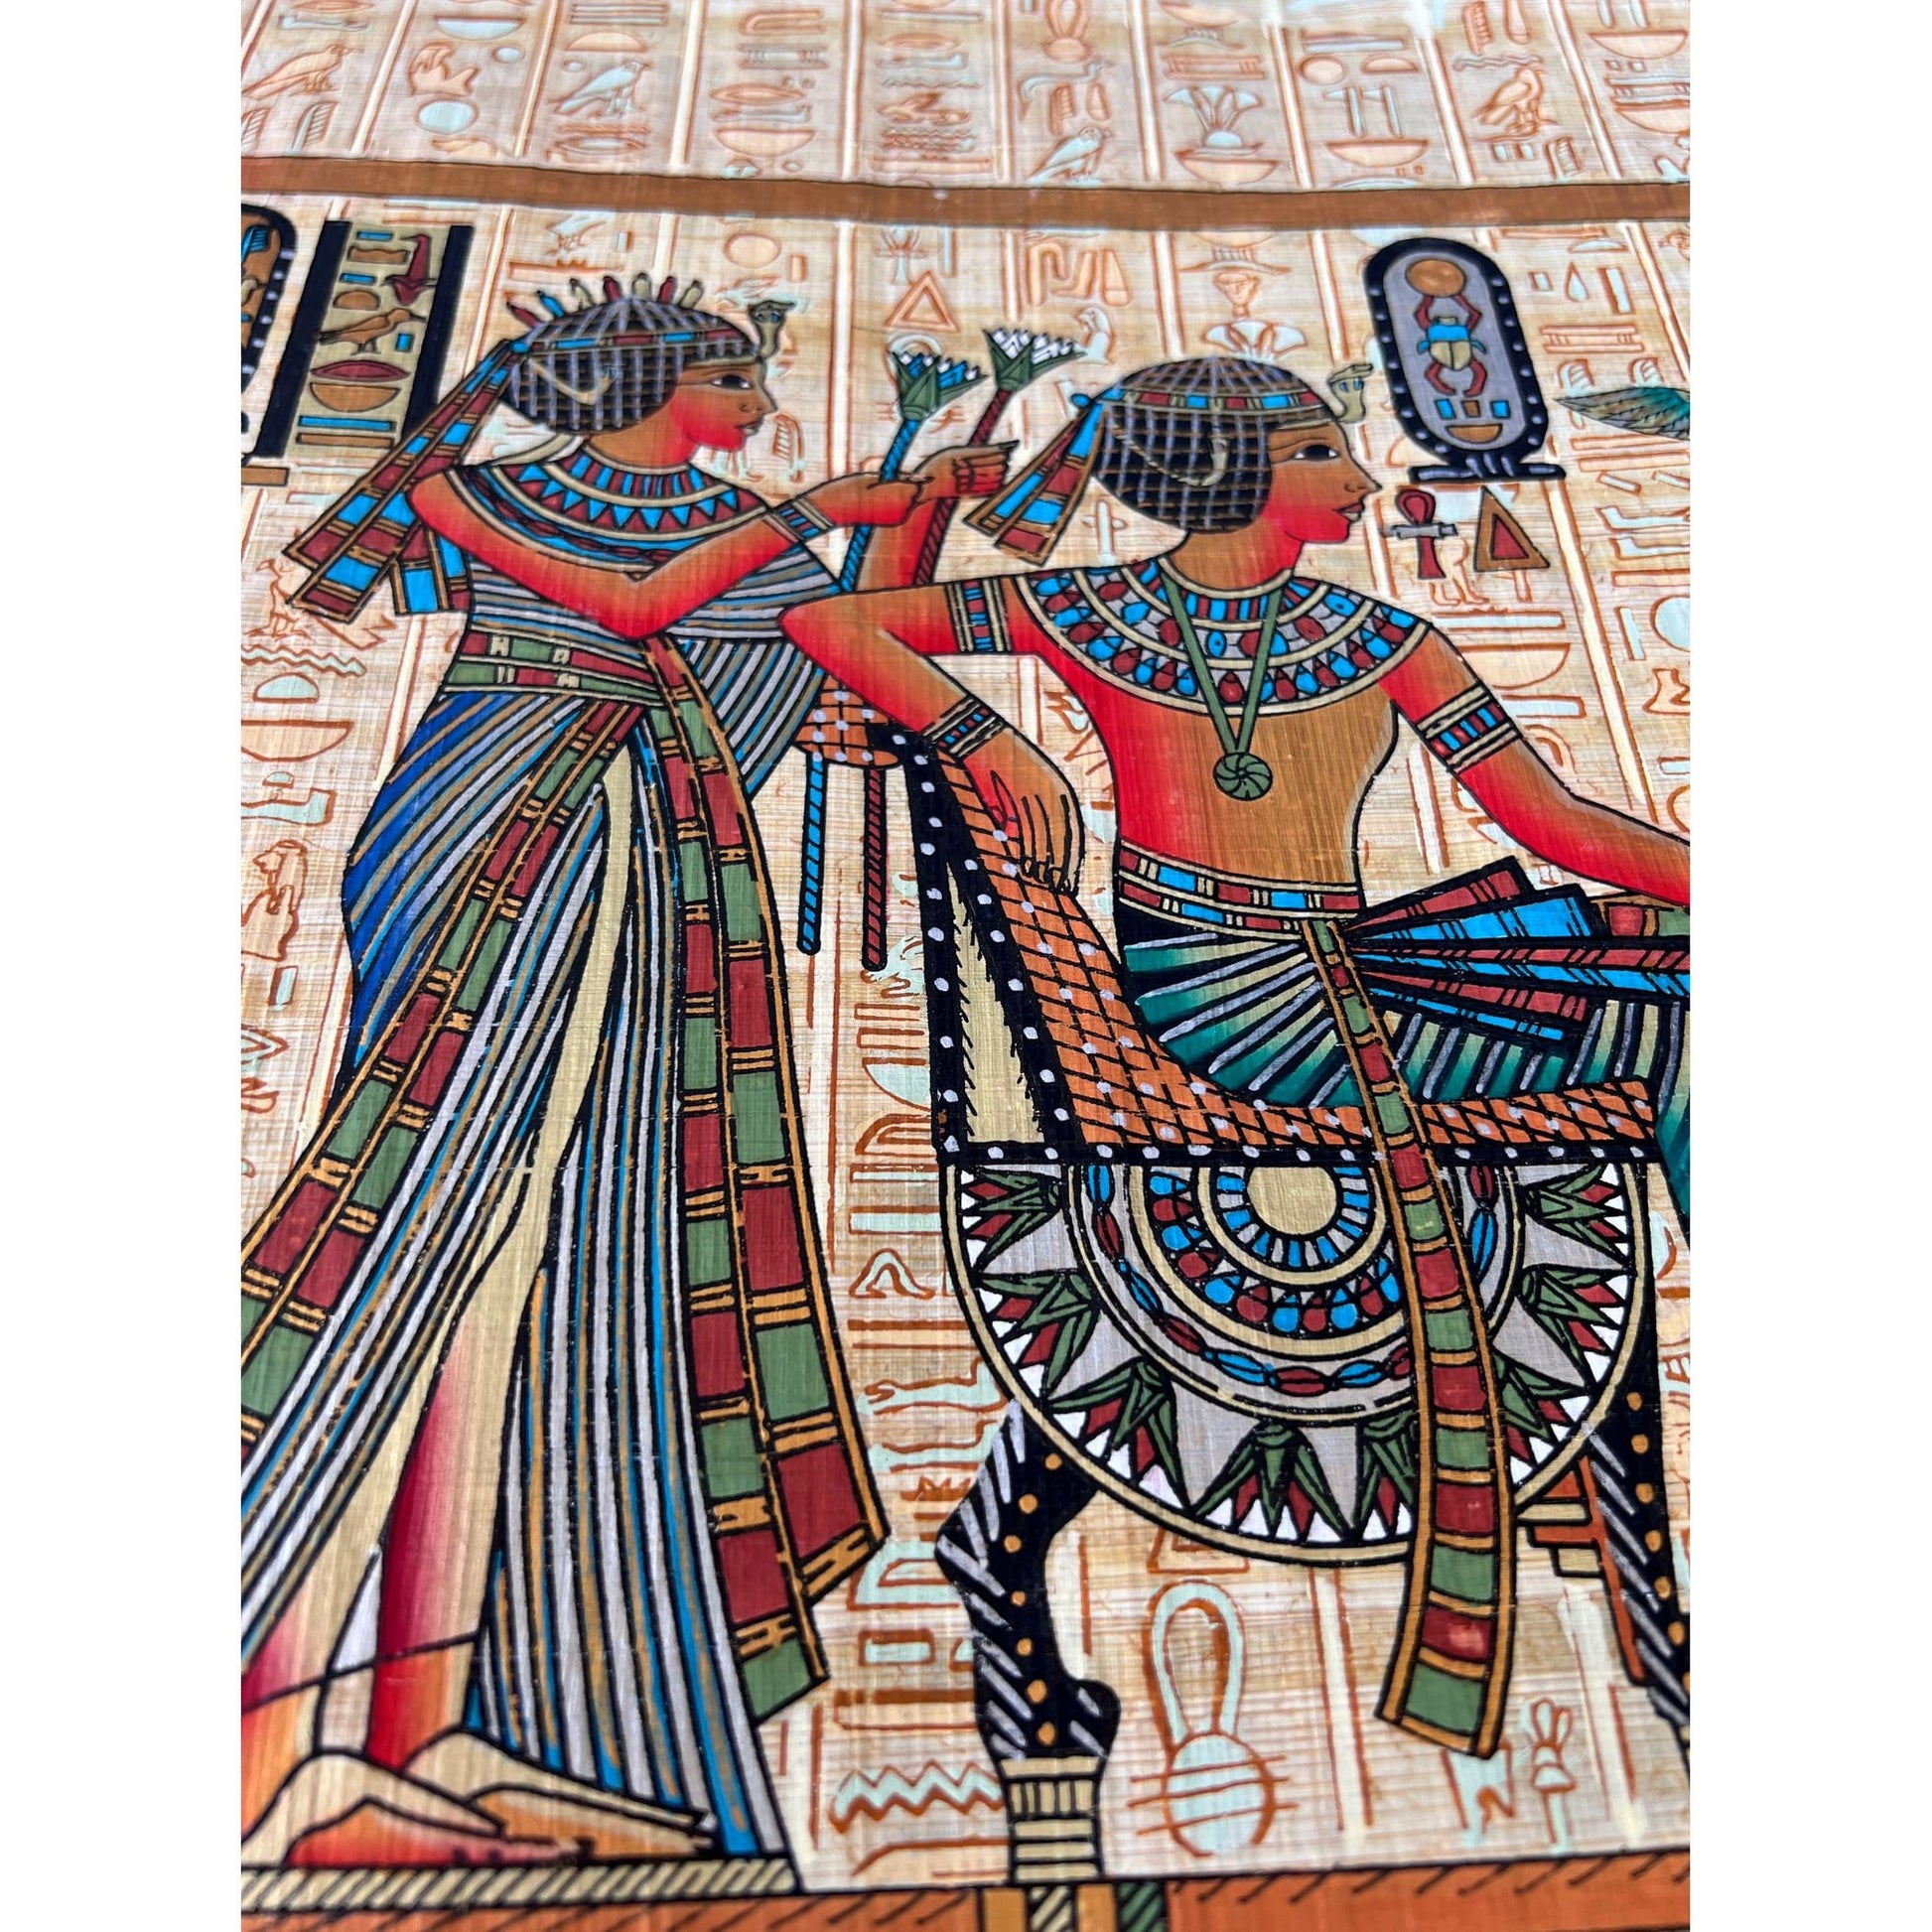 King Tutankhamun Tut accompanied by Queen Ankhesenamen on Nile Boat Papyrus